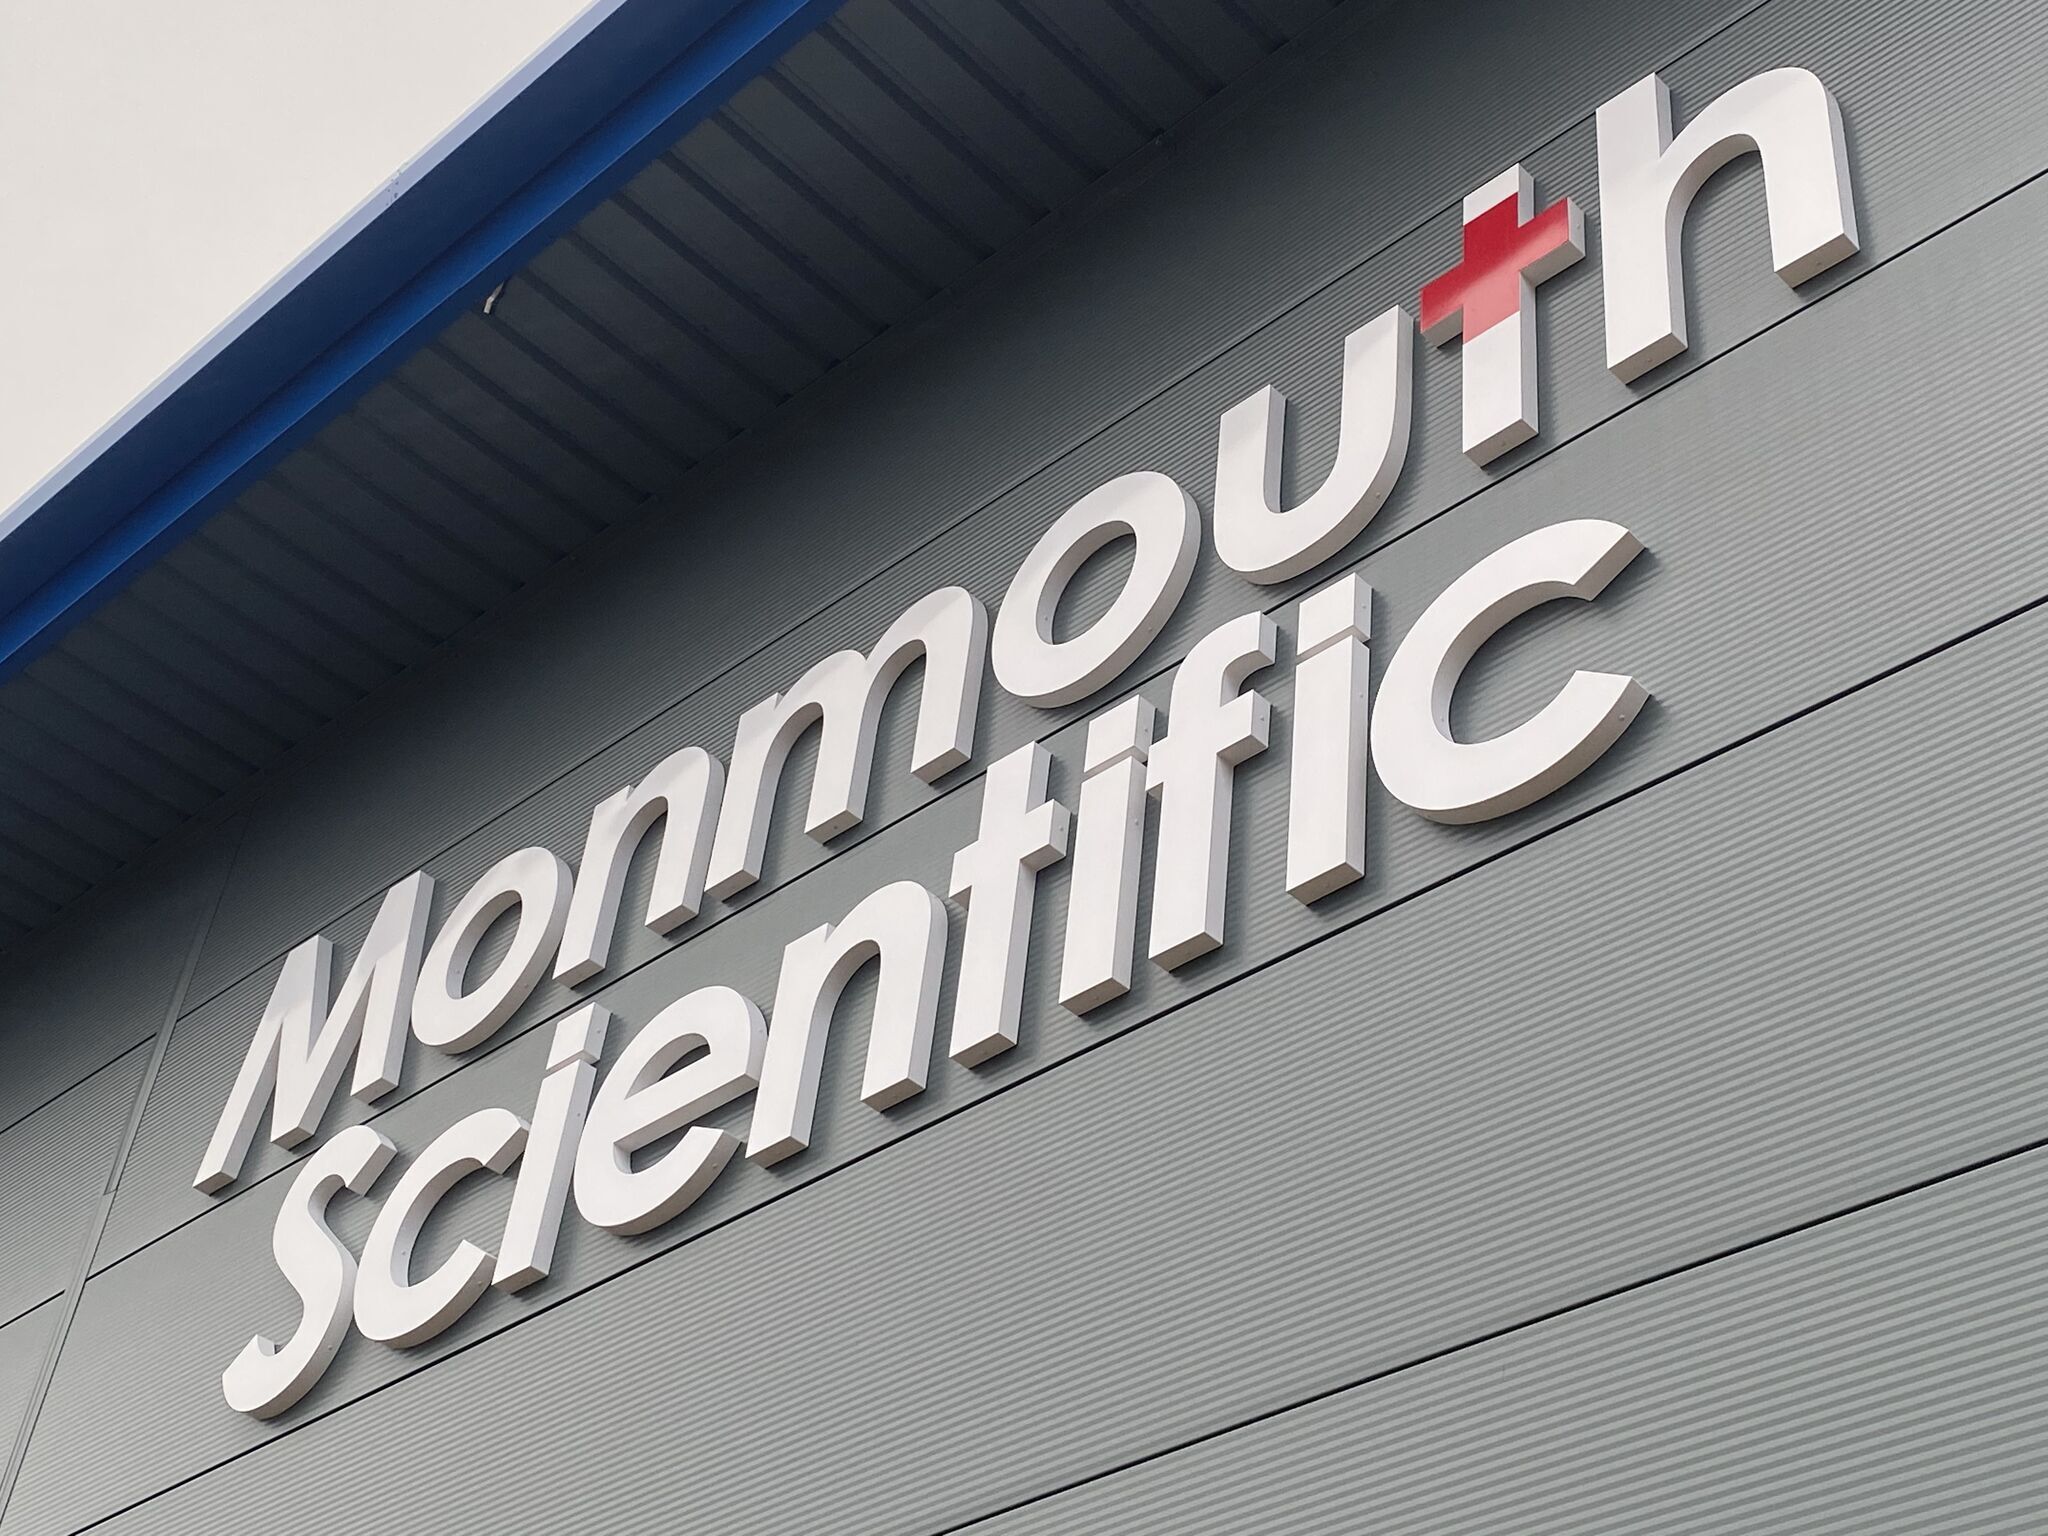 Monmouth Scientific | New HQ Building Updates